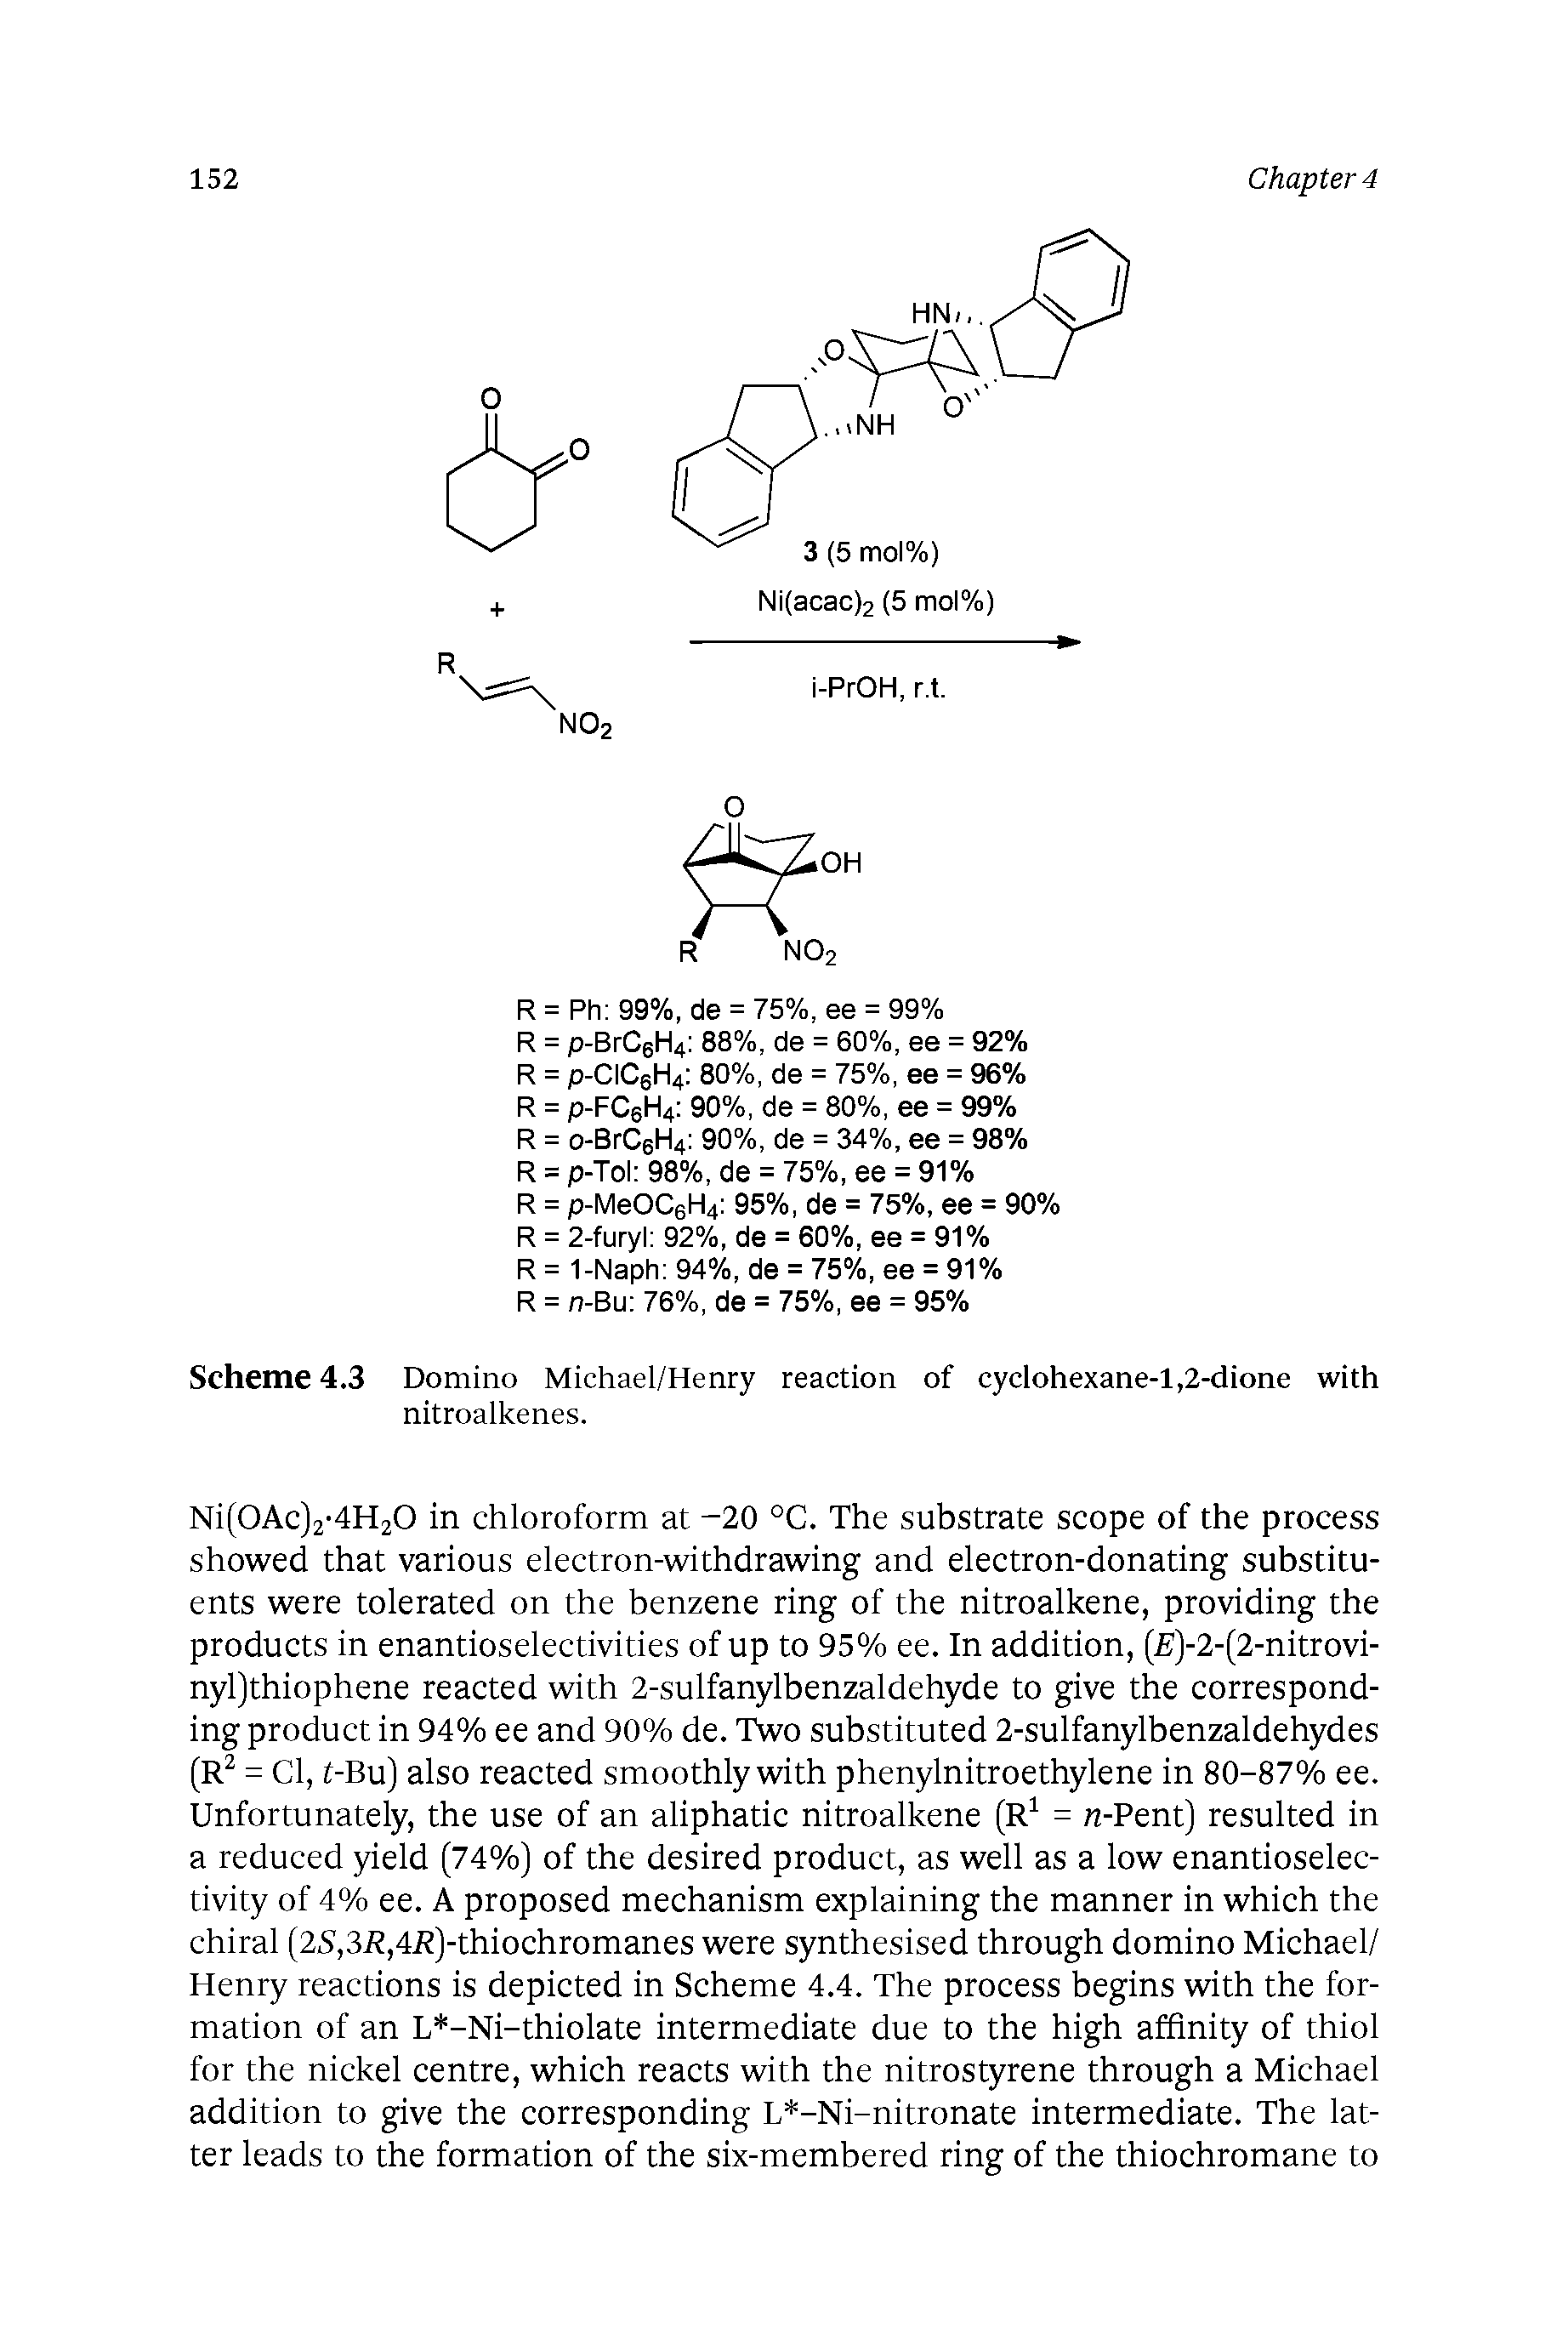 Scheme 4.3 Domino Michael/Henry reaction of cyclohexane-1,2-dione with nitroalkenes.